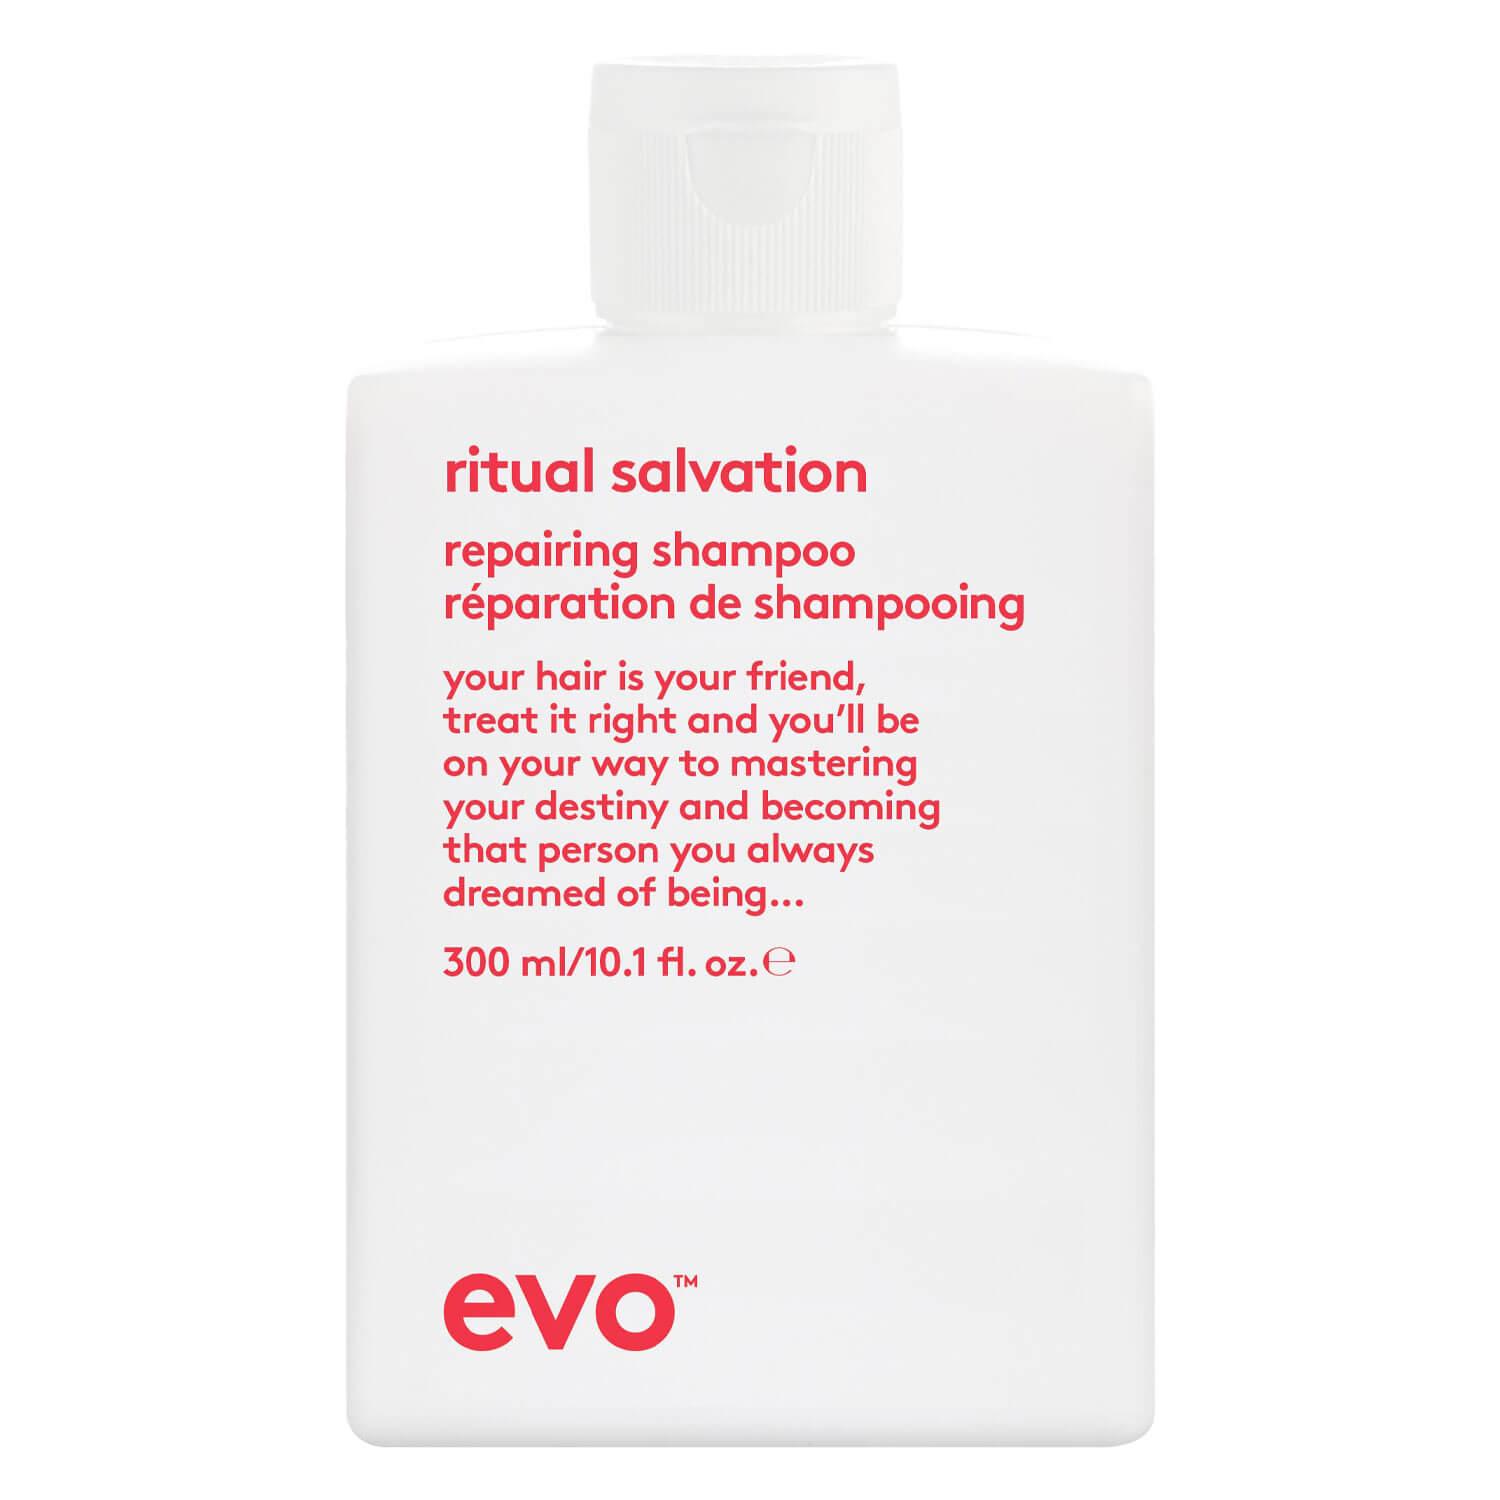 evo care - ritual salvation care shampoo